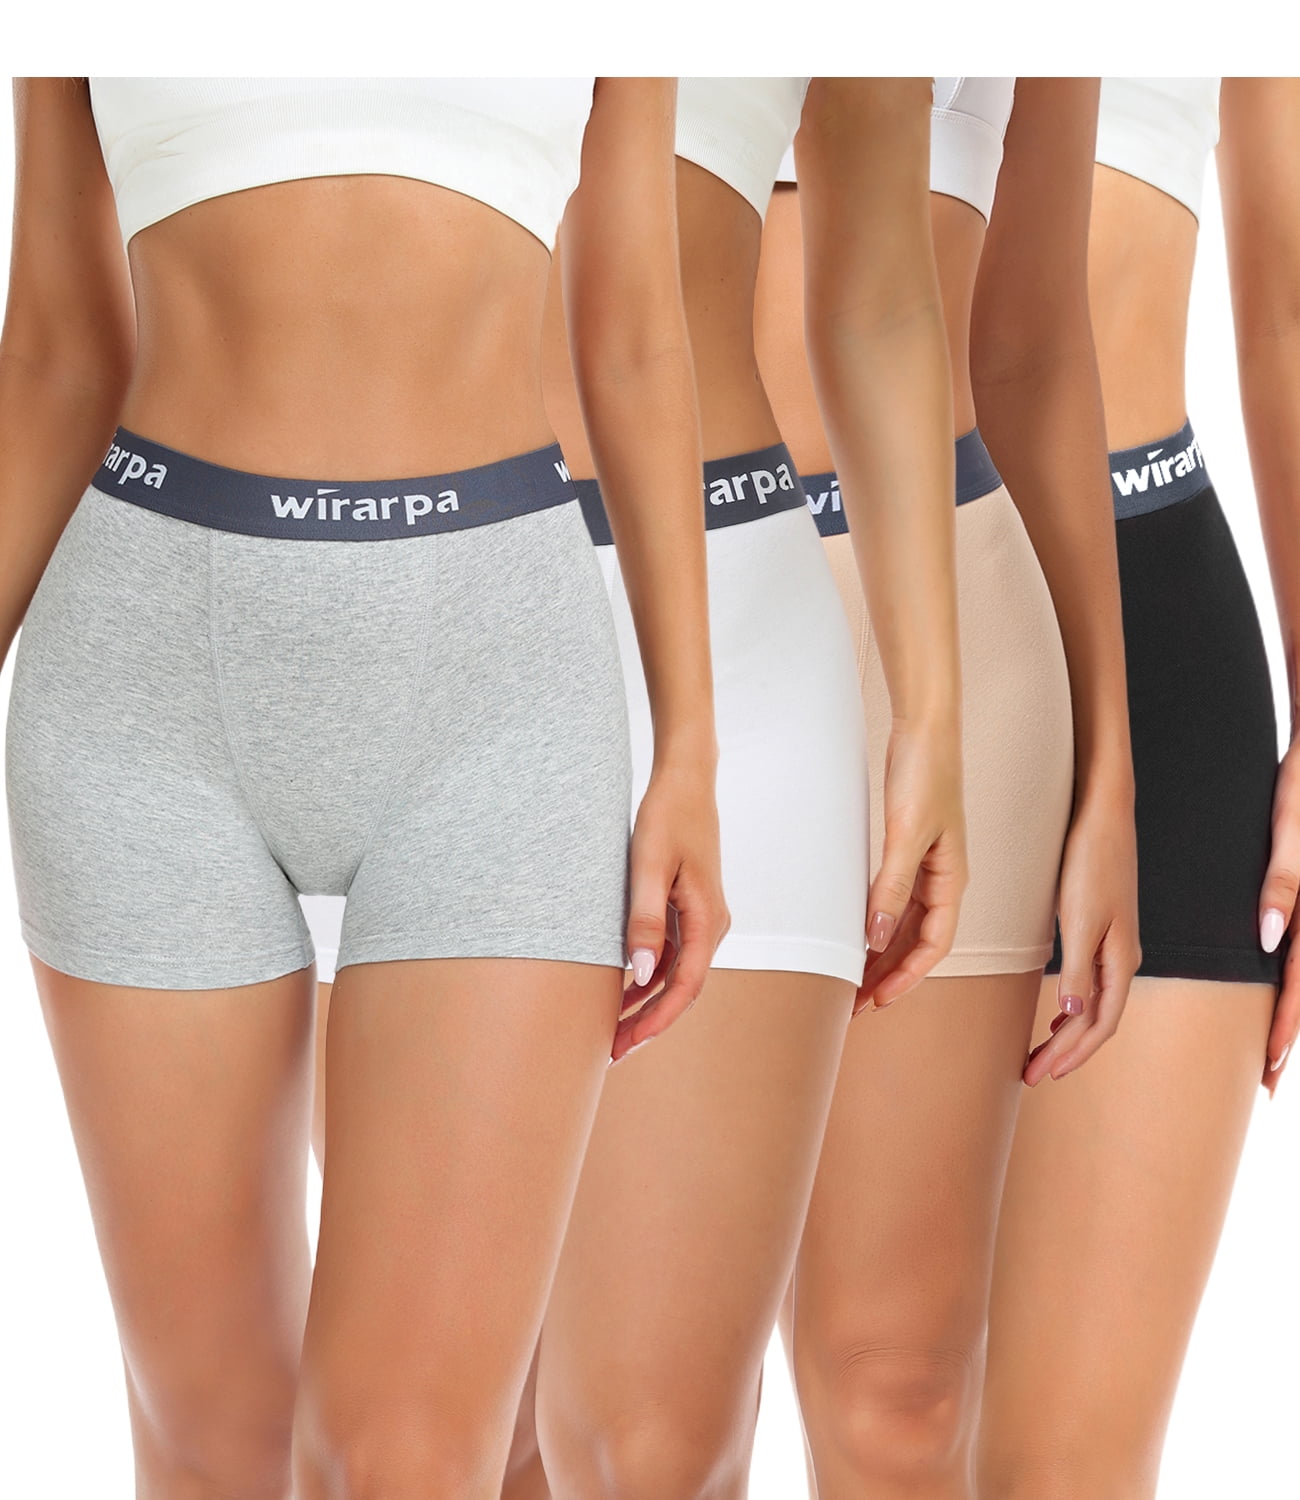 wirarpa Women's Anti Chafing Cotton Underwear Boy Shorts Long Leg Boyshorts  Panties 3 Pack(White) - wirarpa